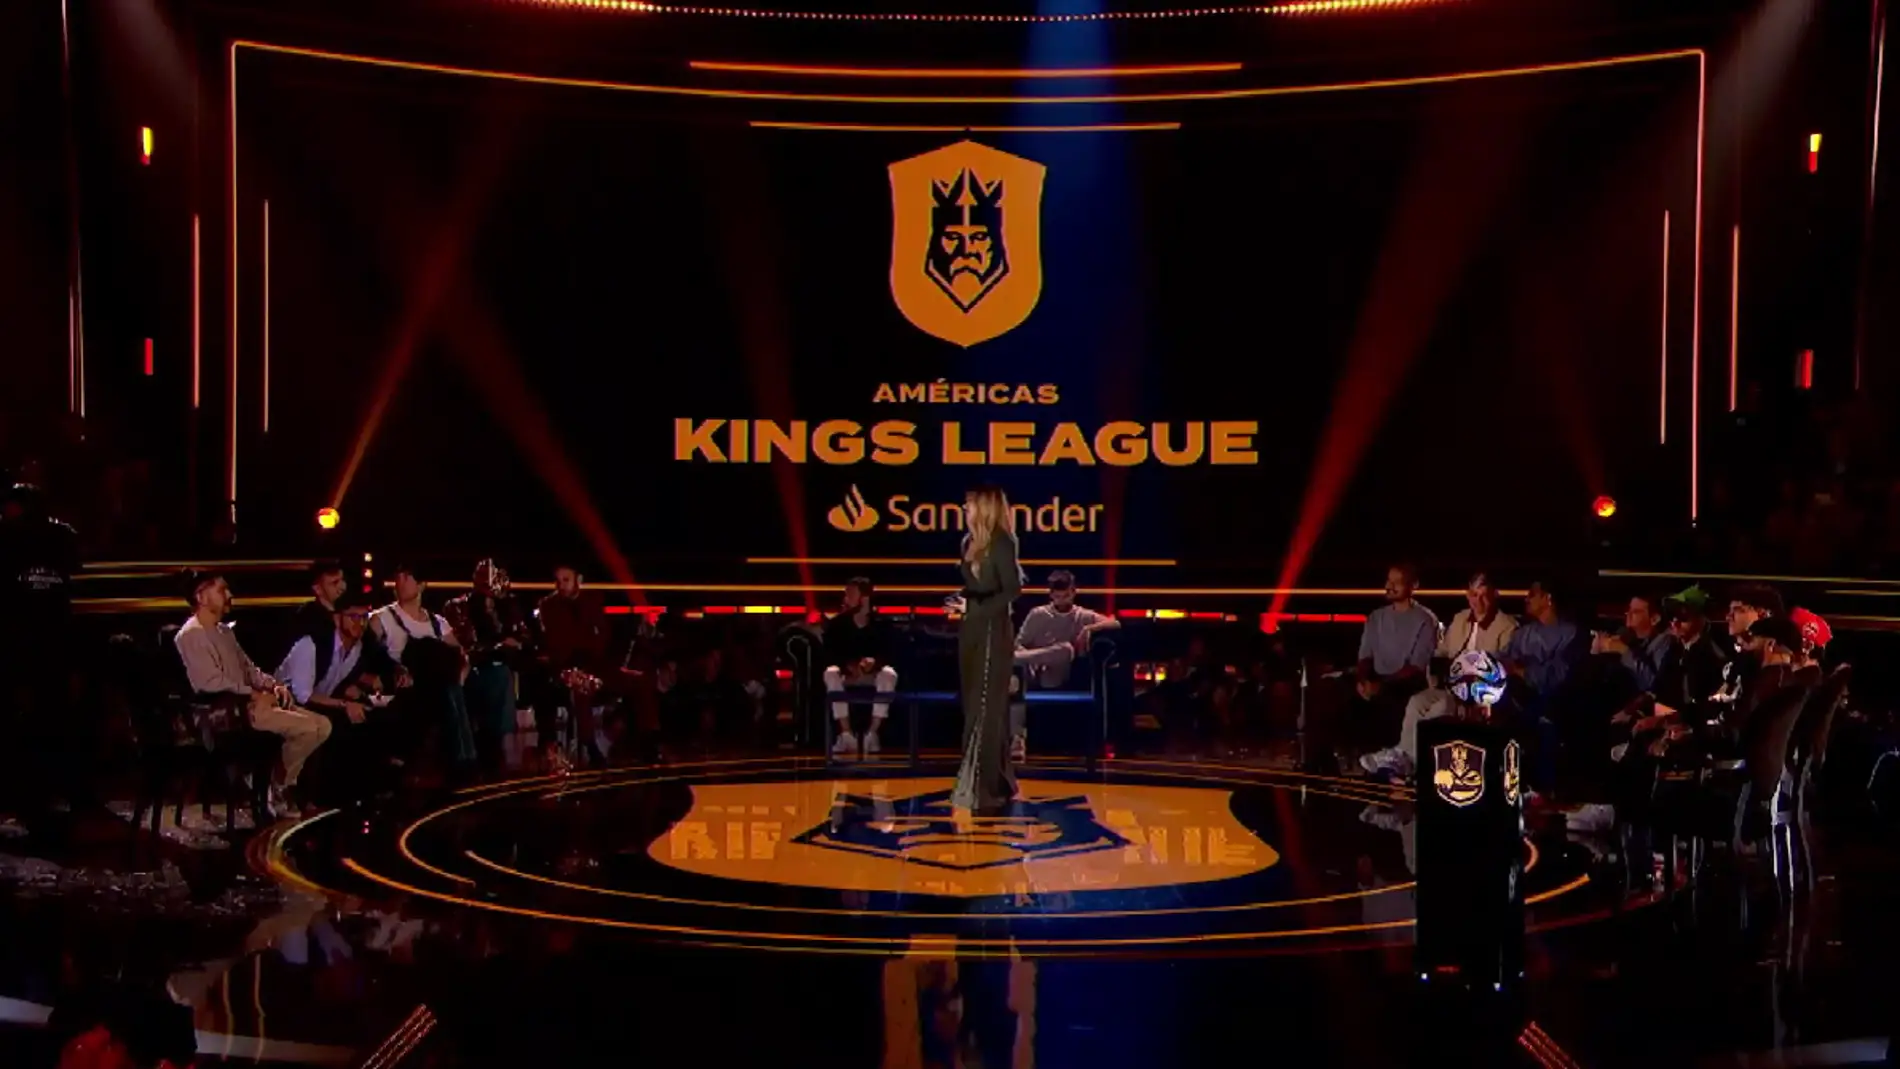 Presentación de la Kings League Américas.